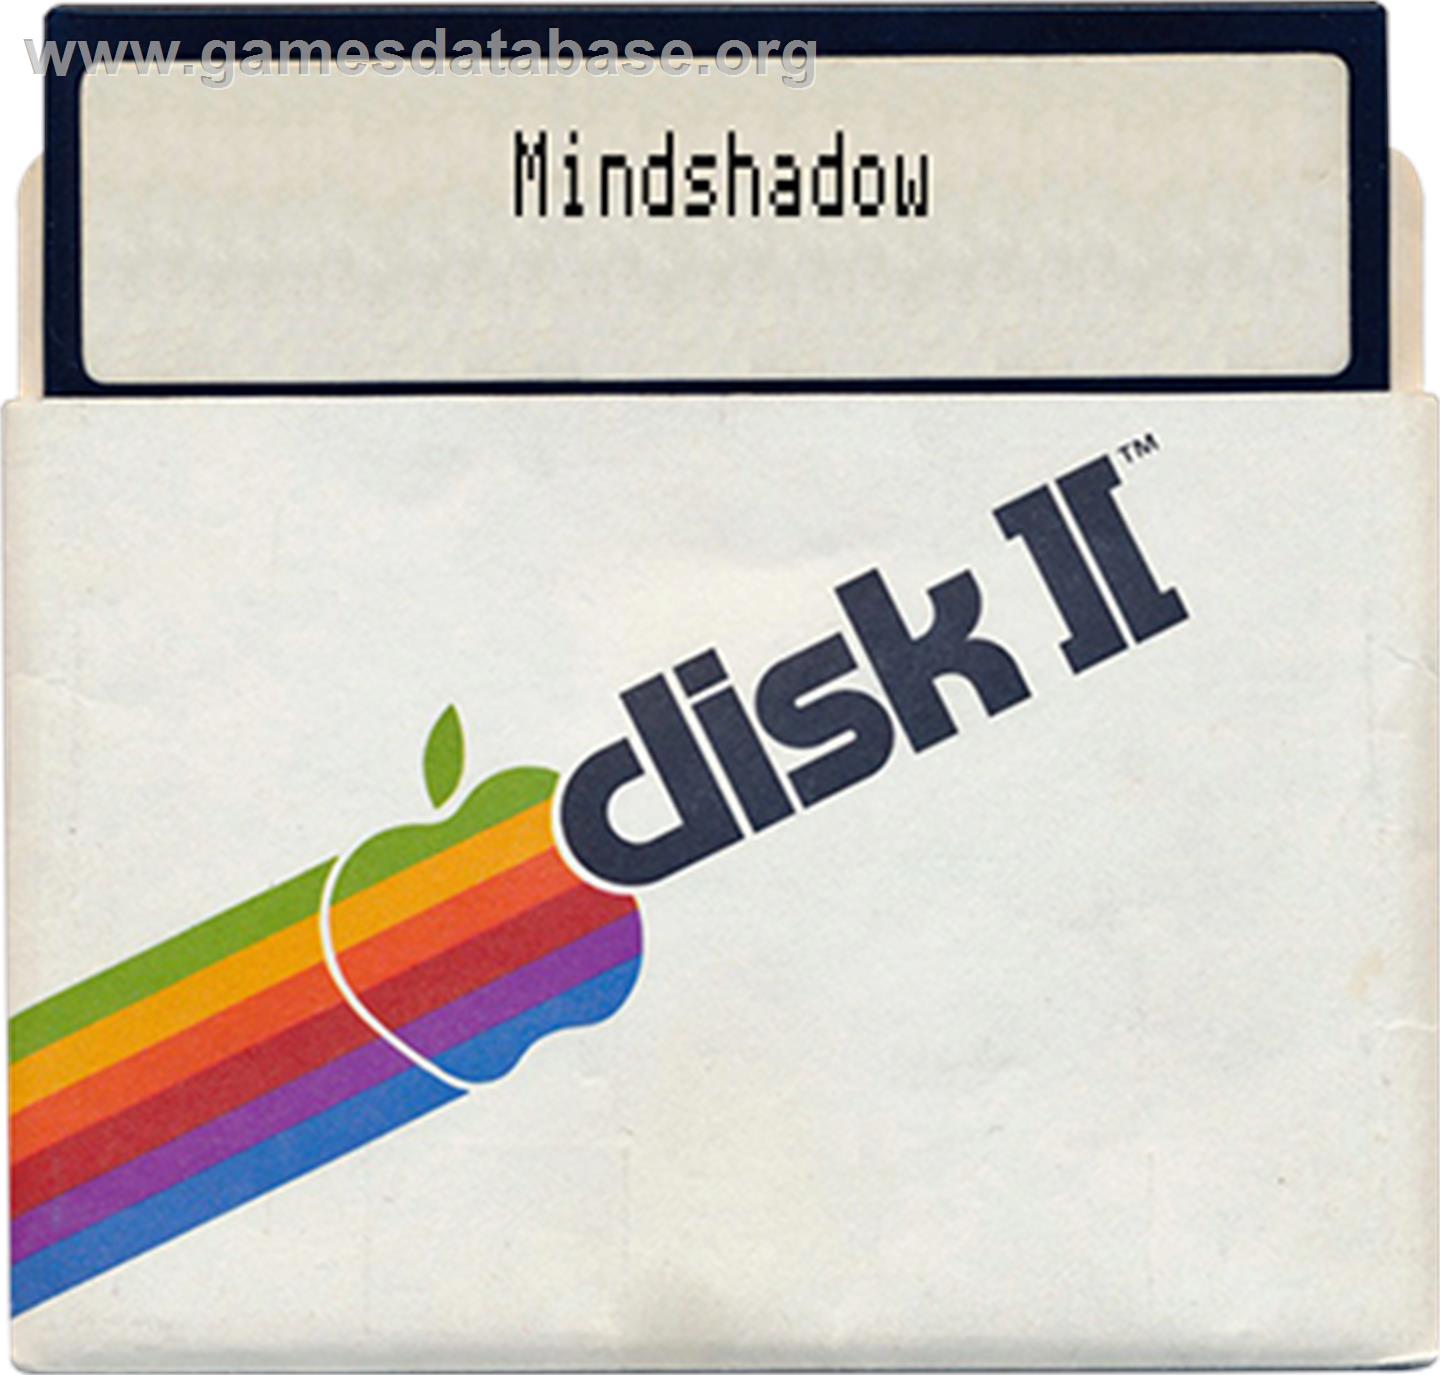 Mindshadow - Apple II - Artwork - Disc